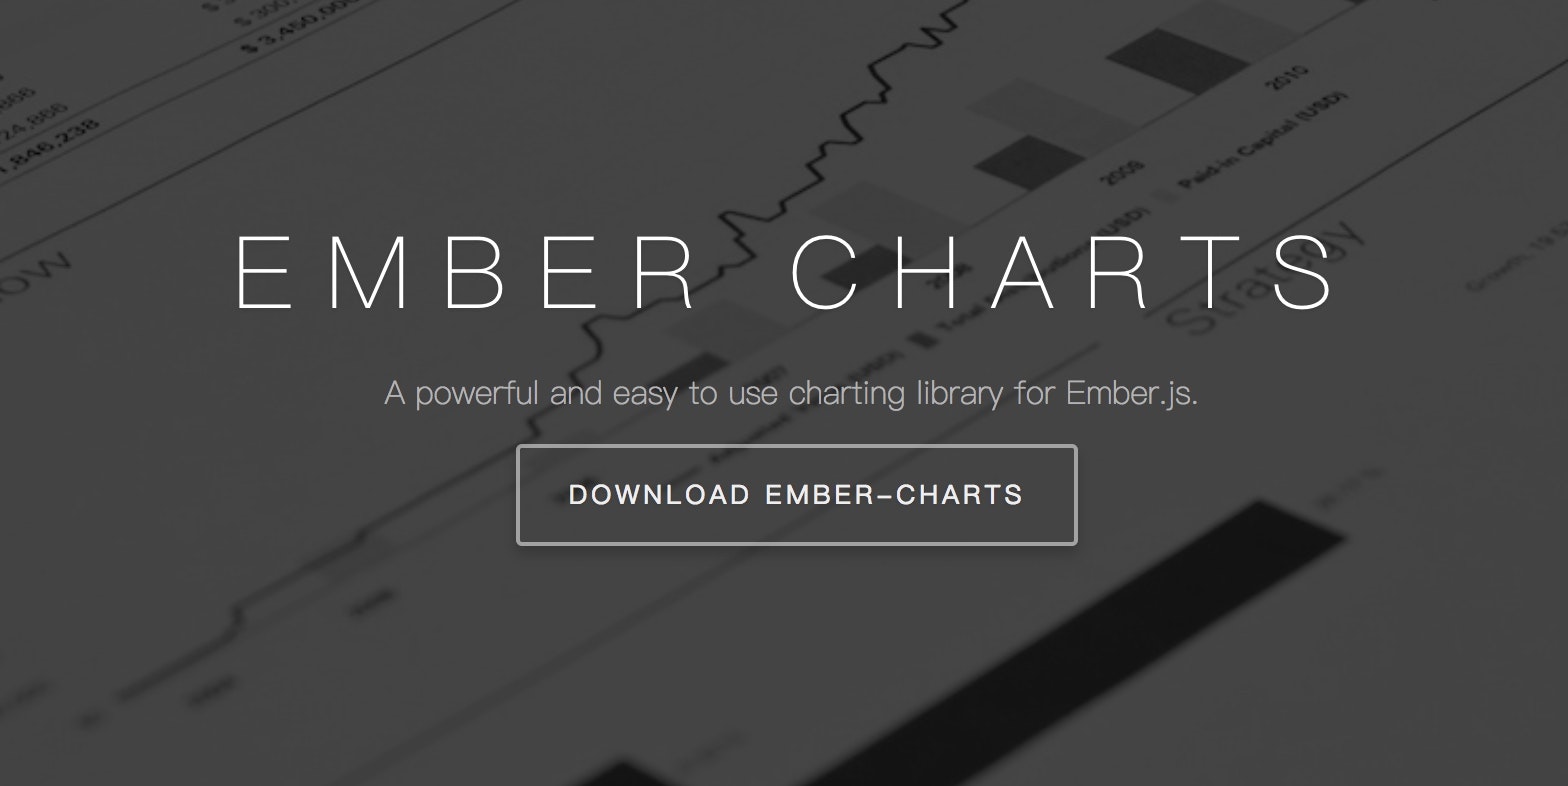 20-Ember Charts.jpg